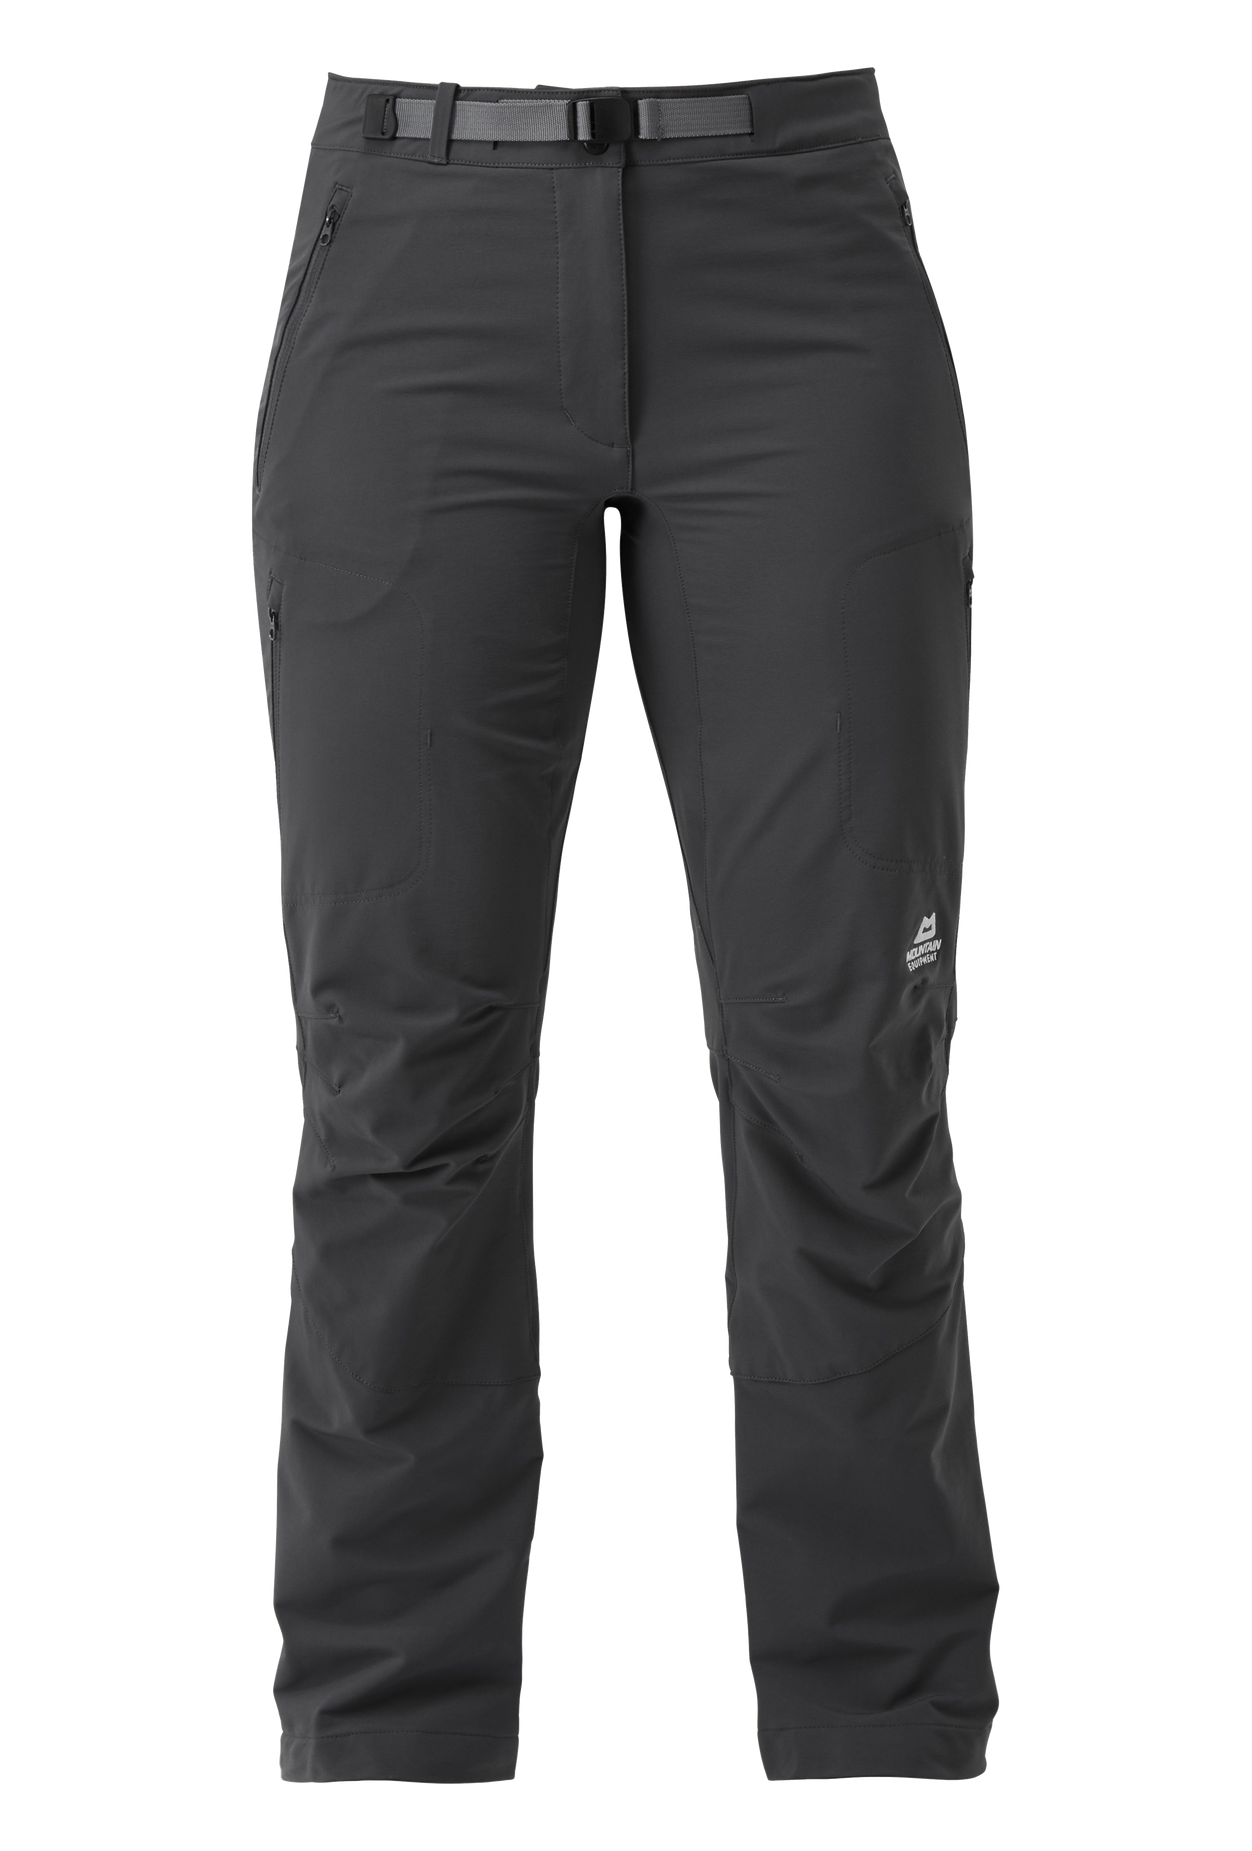 Mountain Equipment dámské softshellové kalhoty Chamois Wmns Pant - zkrácené Barva: Anvil Grey, Velikost: 16/XL